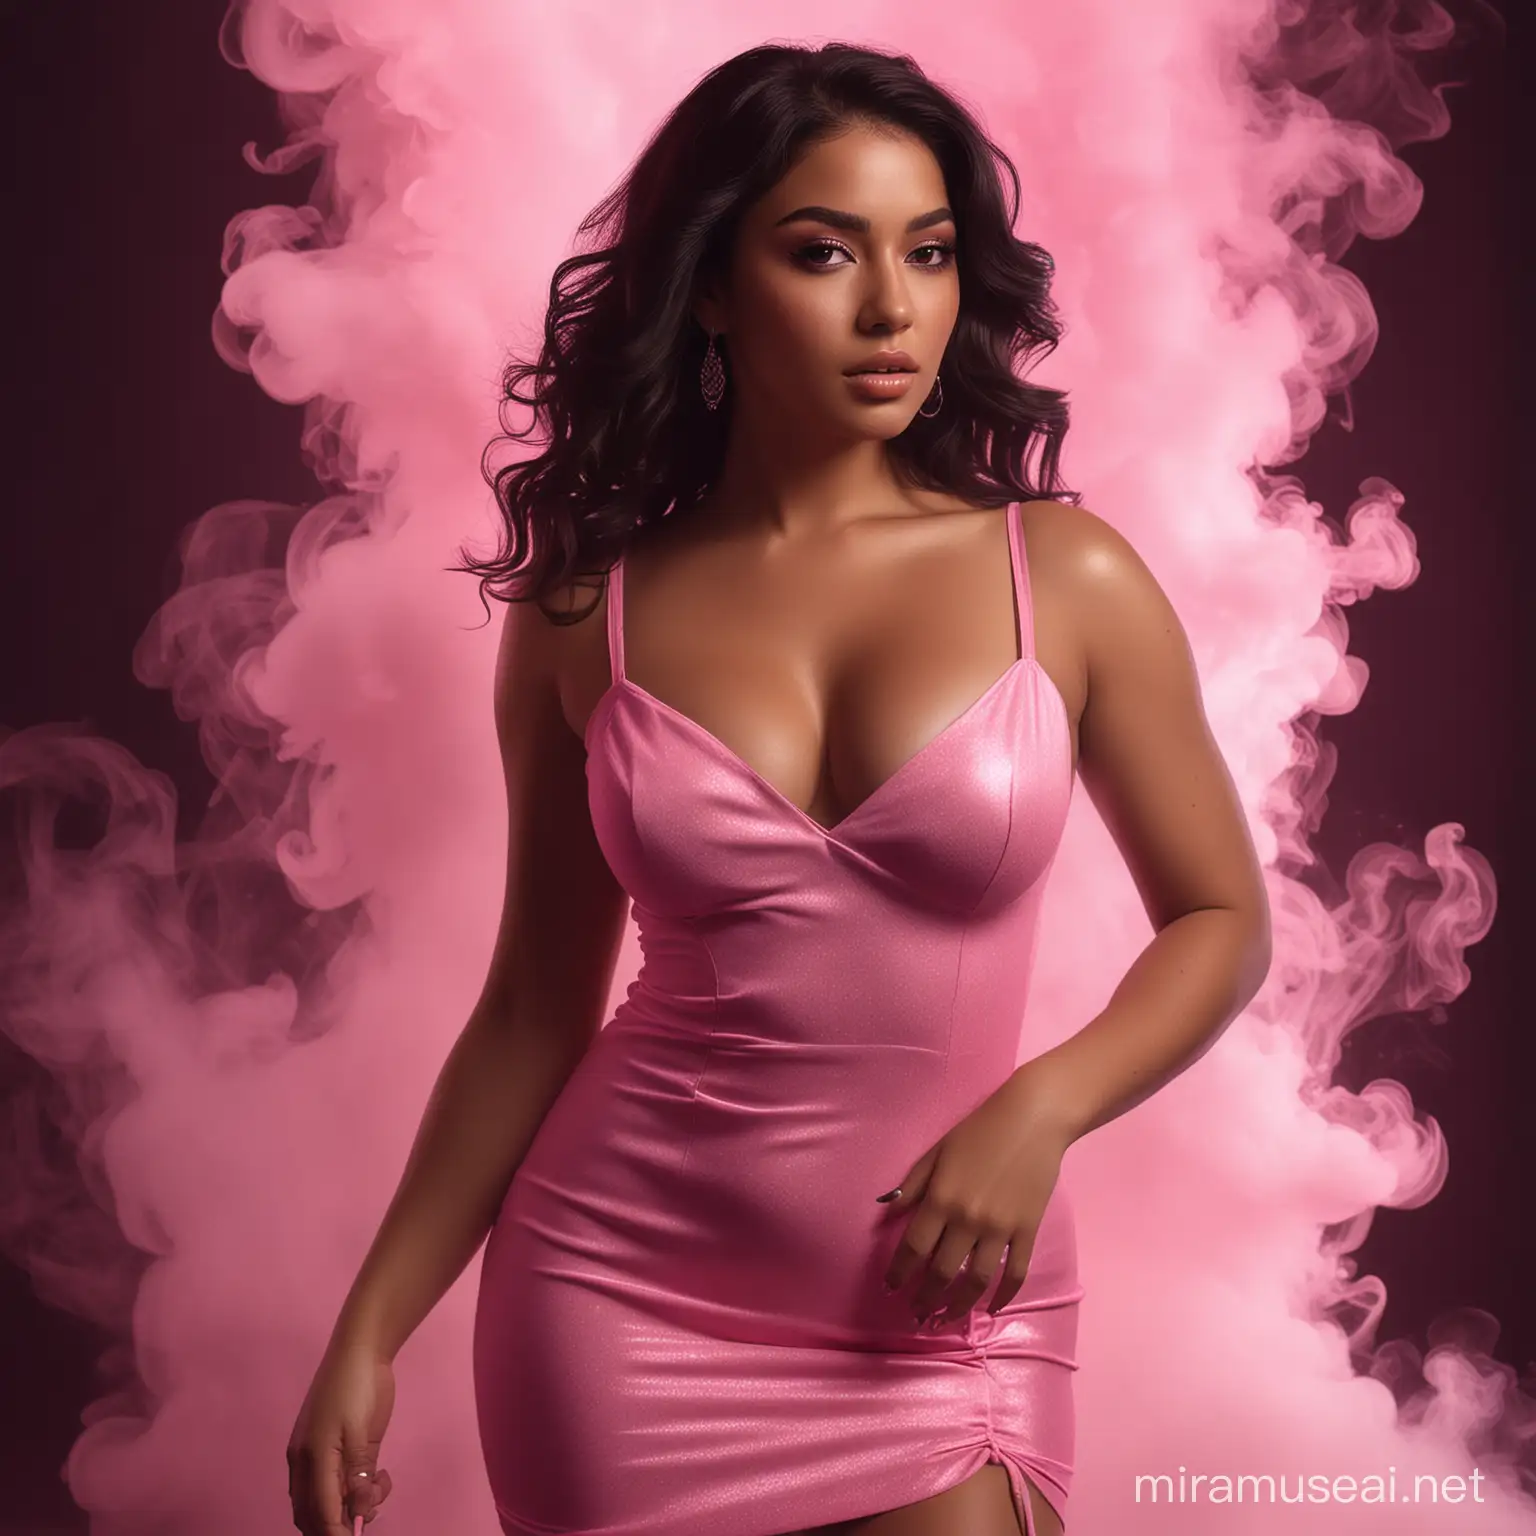 Sensual Curvy Latina Model in Pink Dress Amidst Cinematic Neon Smoke